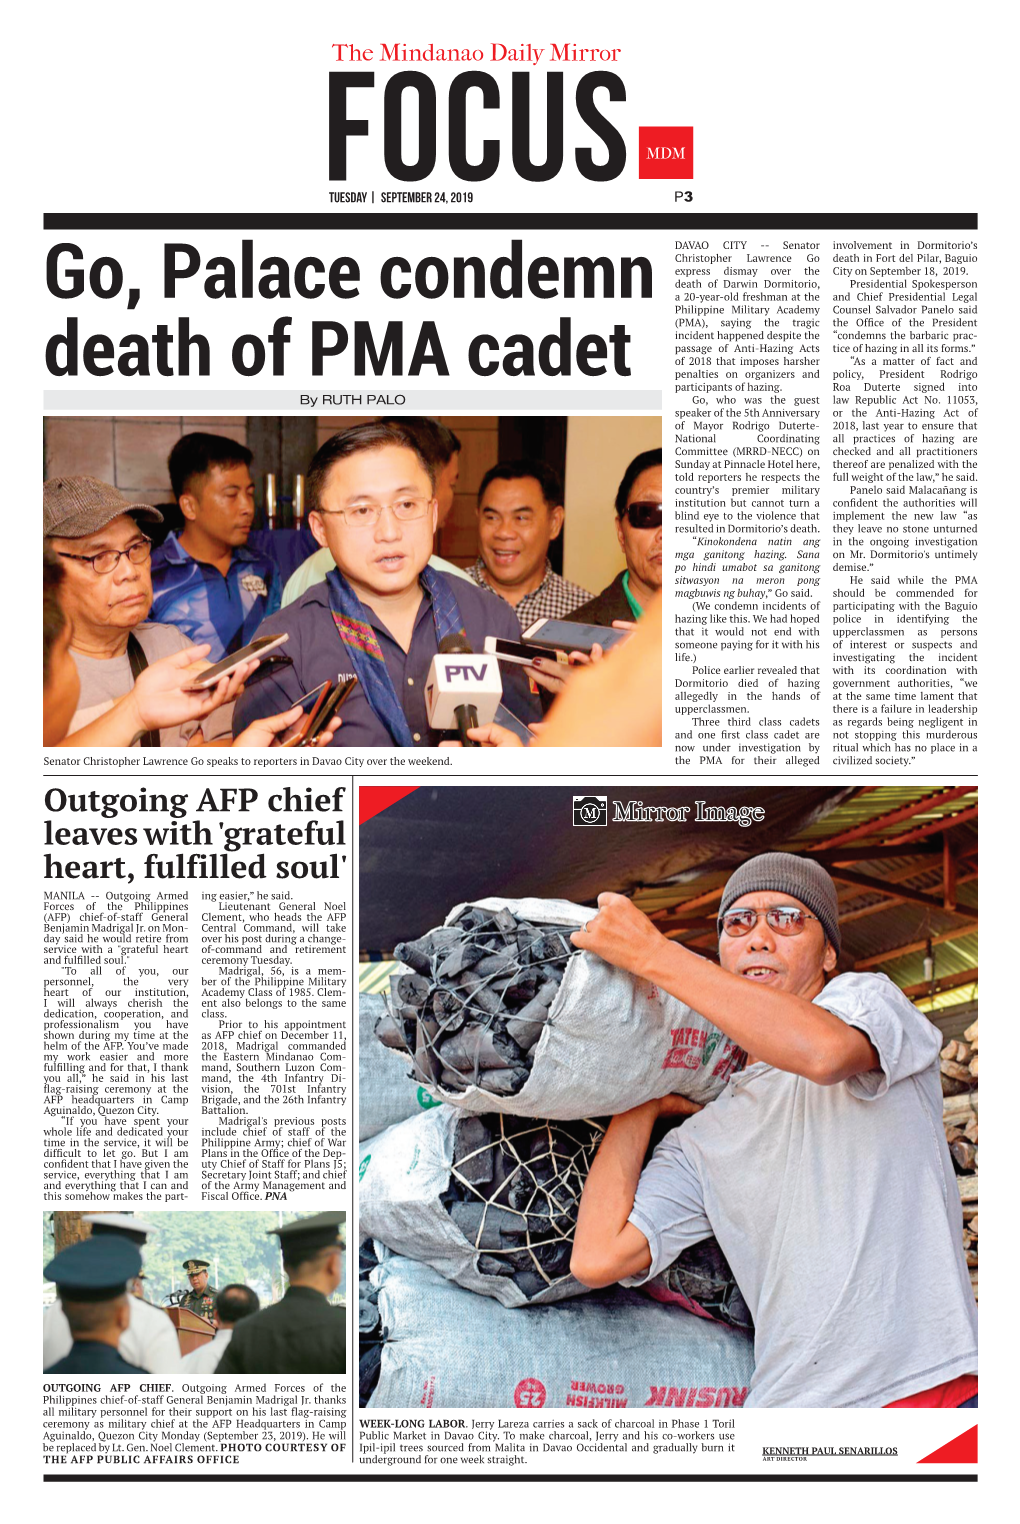 Go, Palace Condemn Death of PMA Cadet